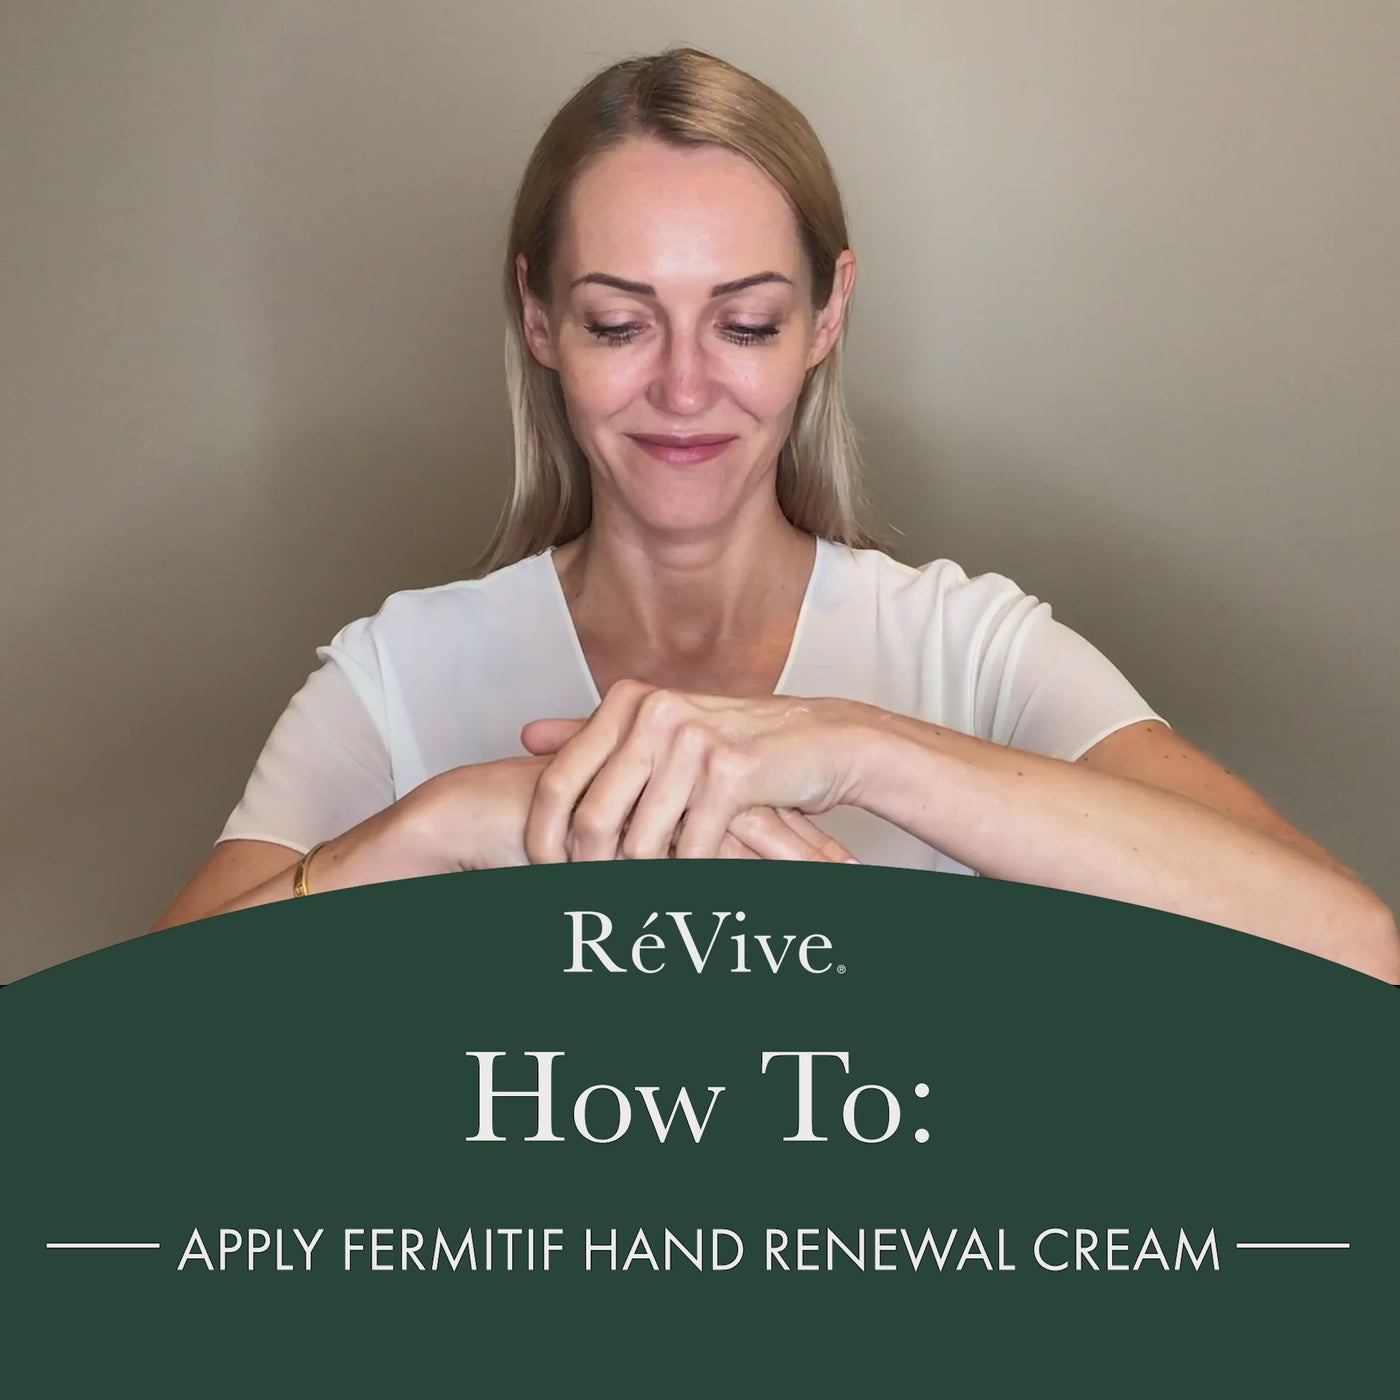 Fermitif Hand Renewal Cream SPF 15 Sunscreen